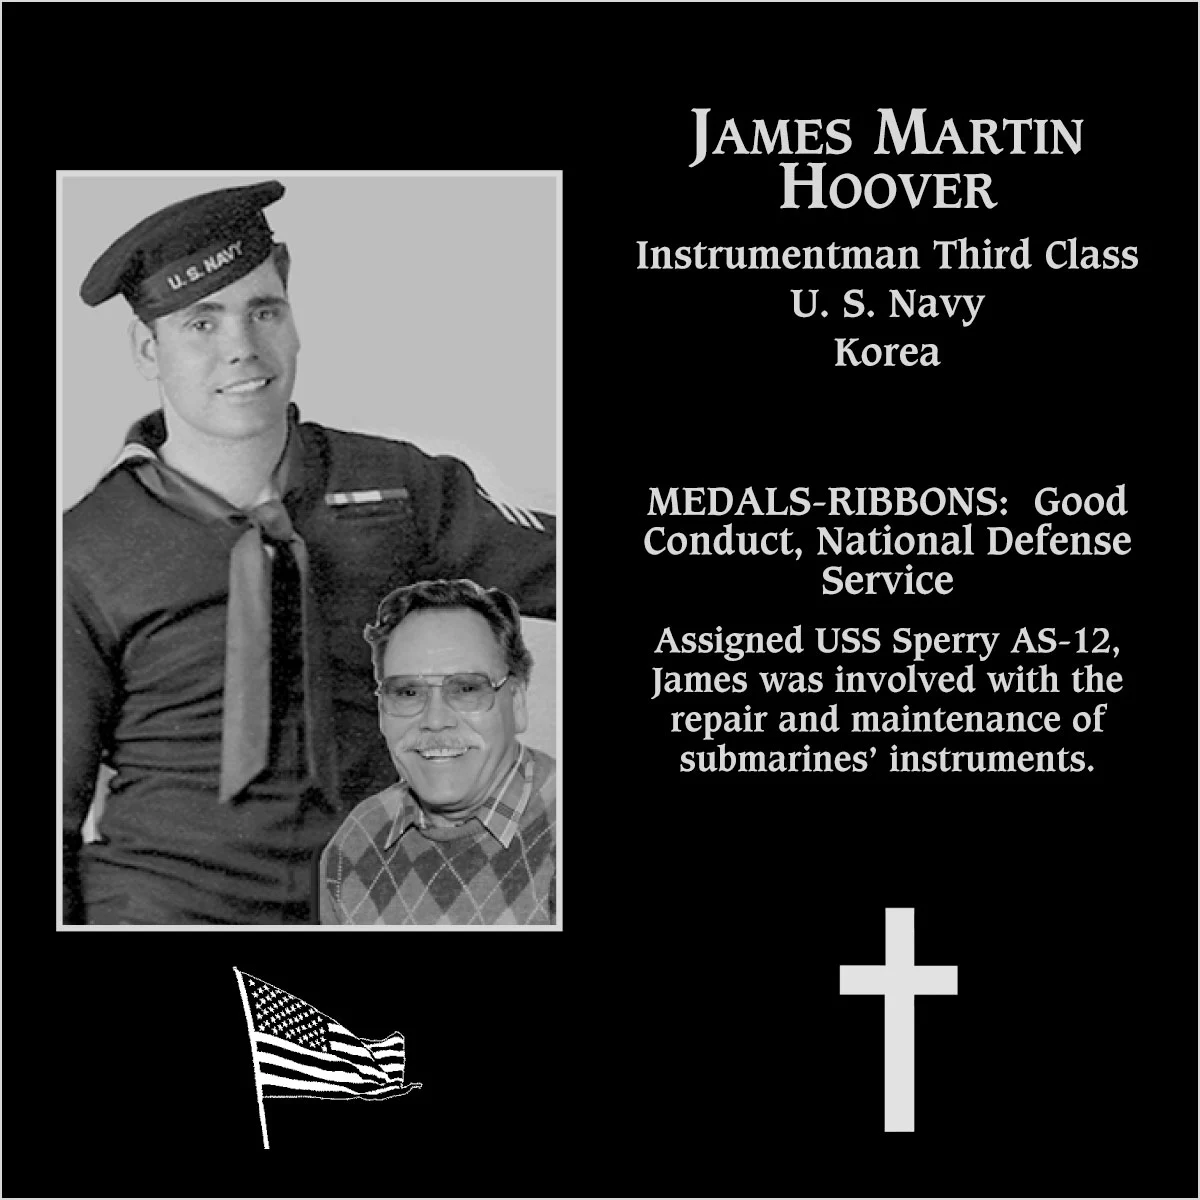 James Martin Hoover